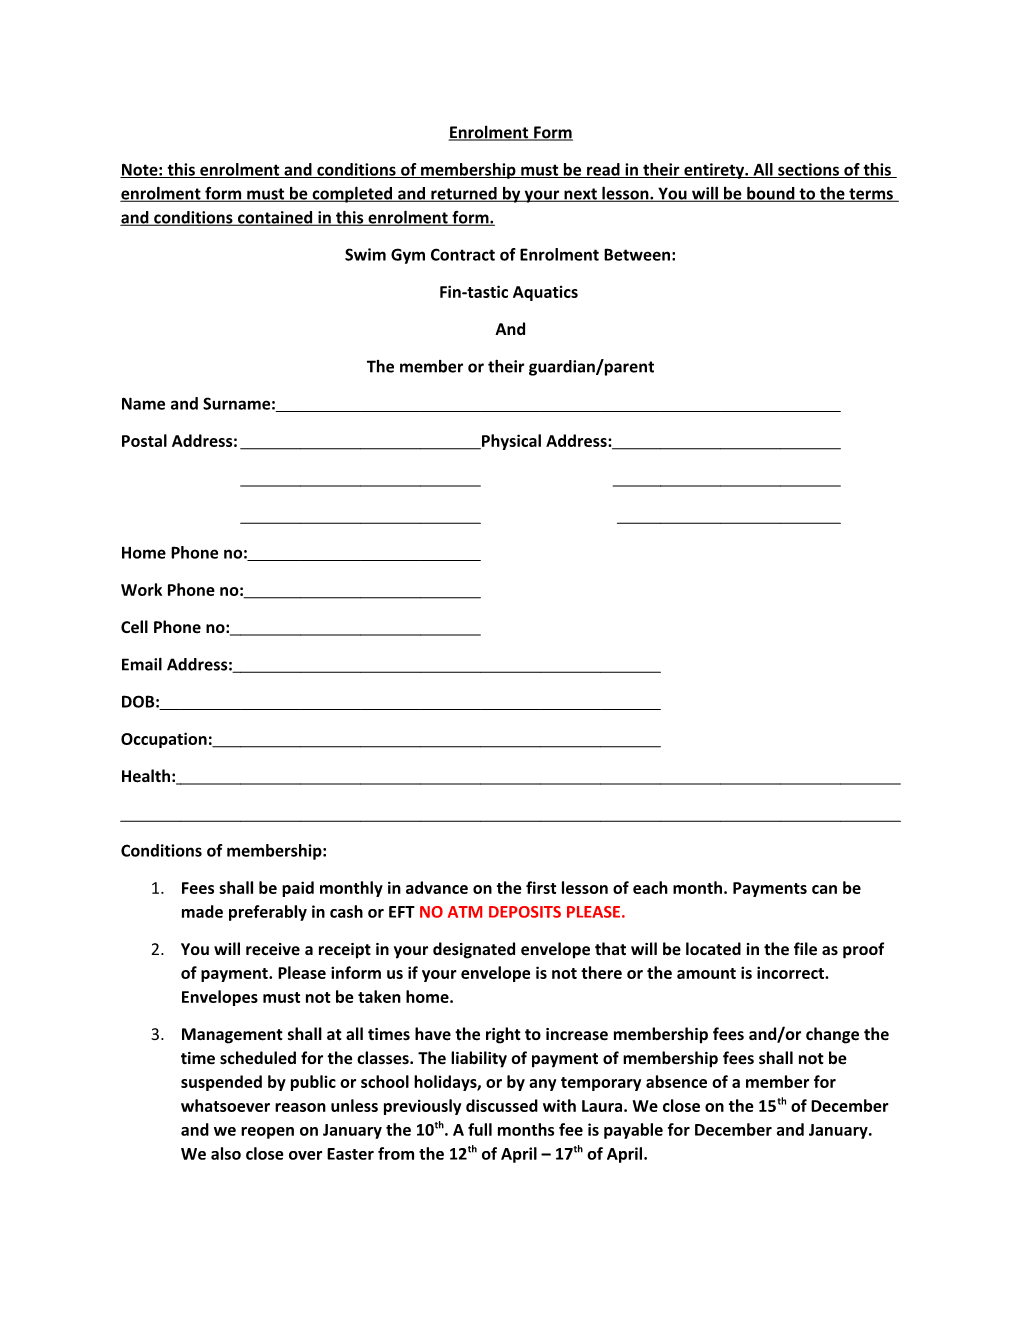 Swim Gym Contract of Enrolment Between